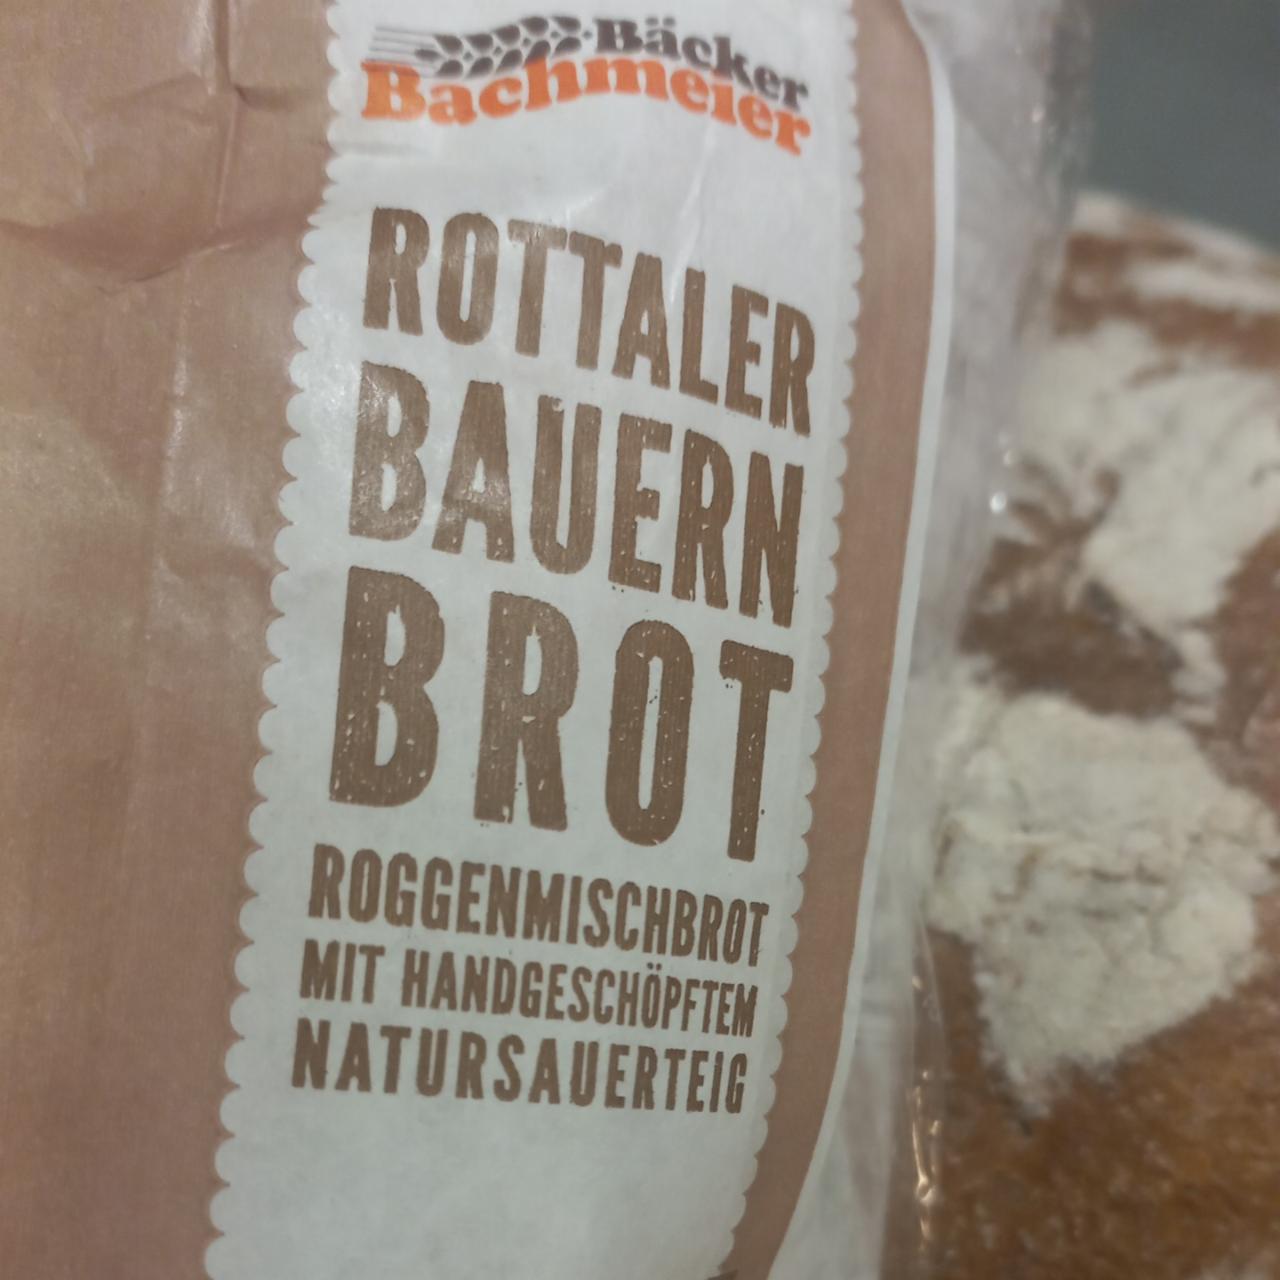 Fotografie - Rottaler Bauernbrot Bäcker Bachmeier